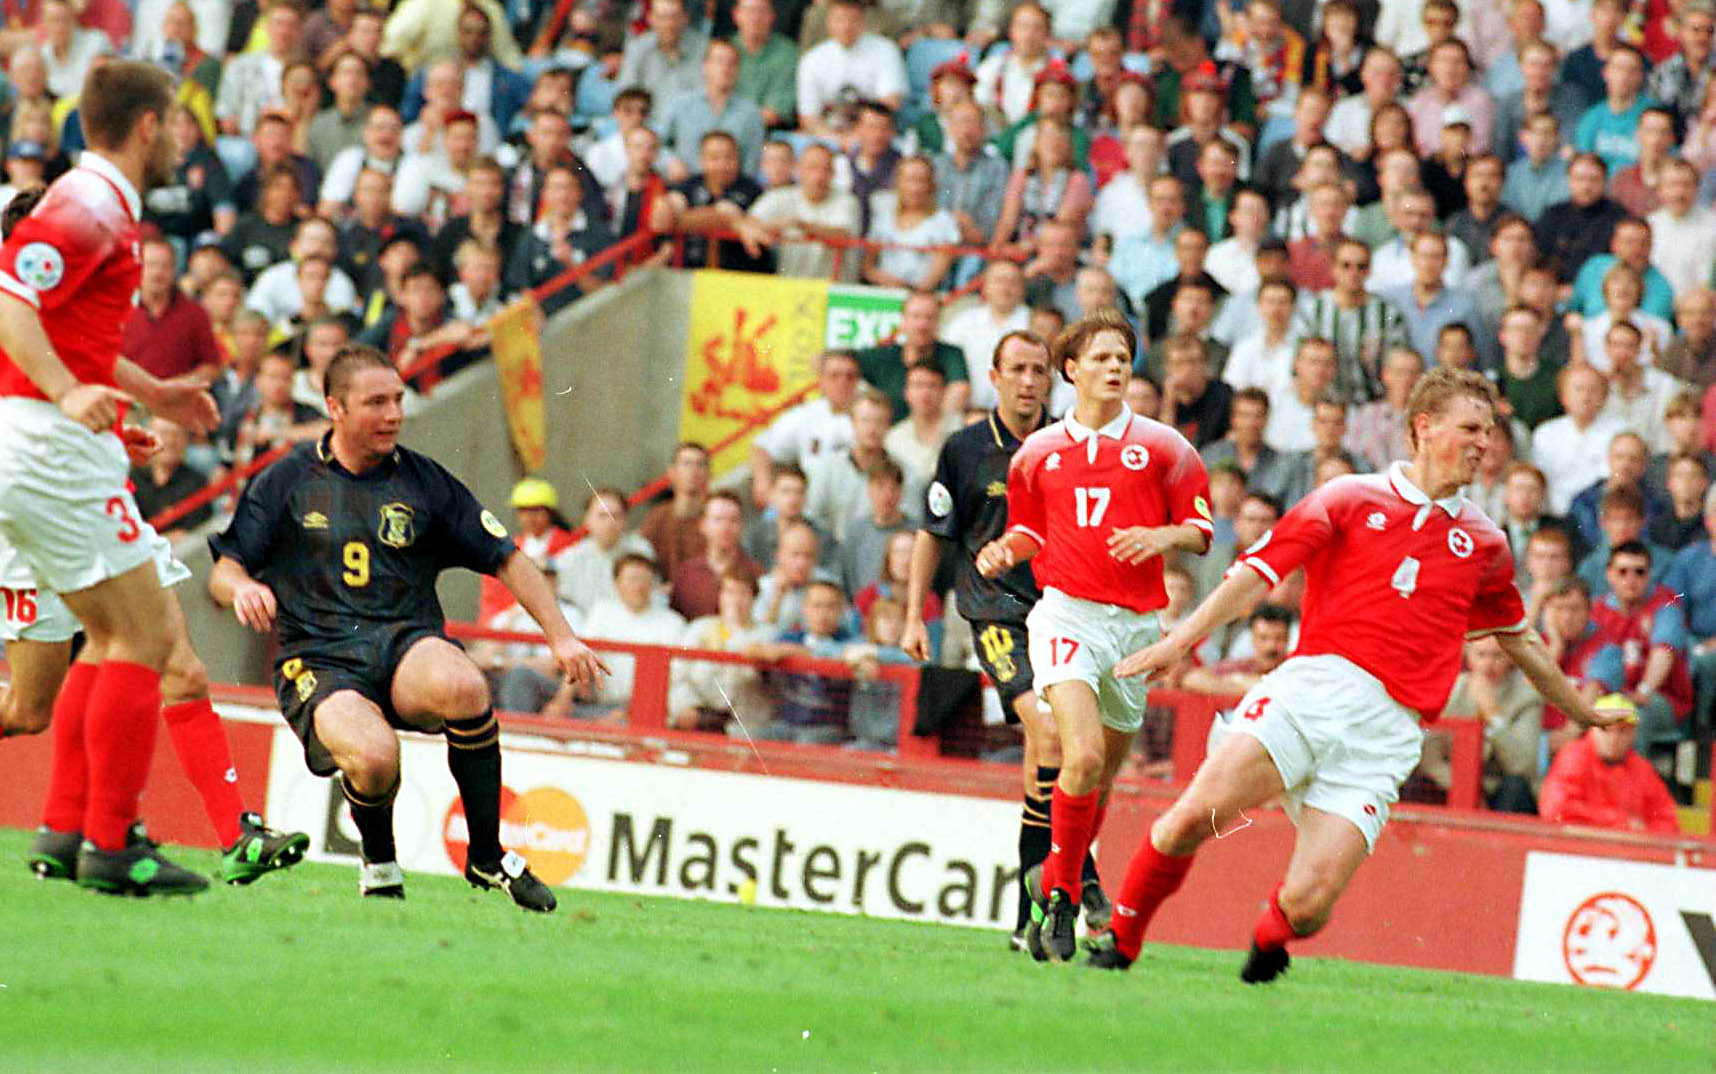 Ally McCoist scored Scotland's last goal at the Euros in 1996.